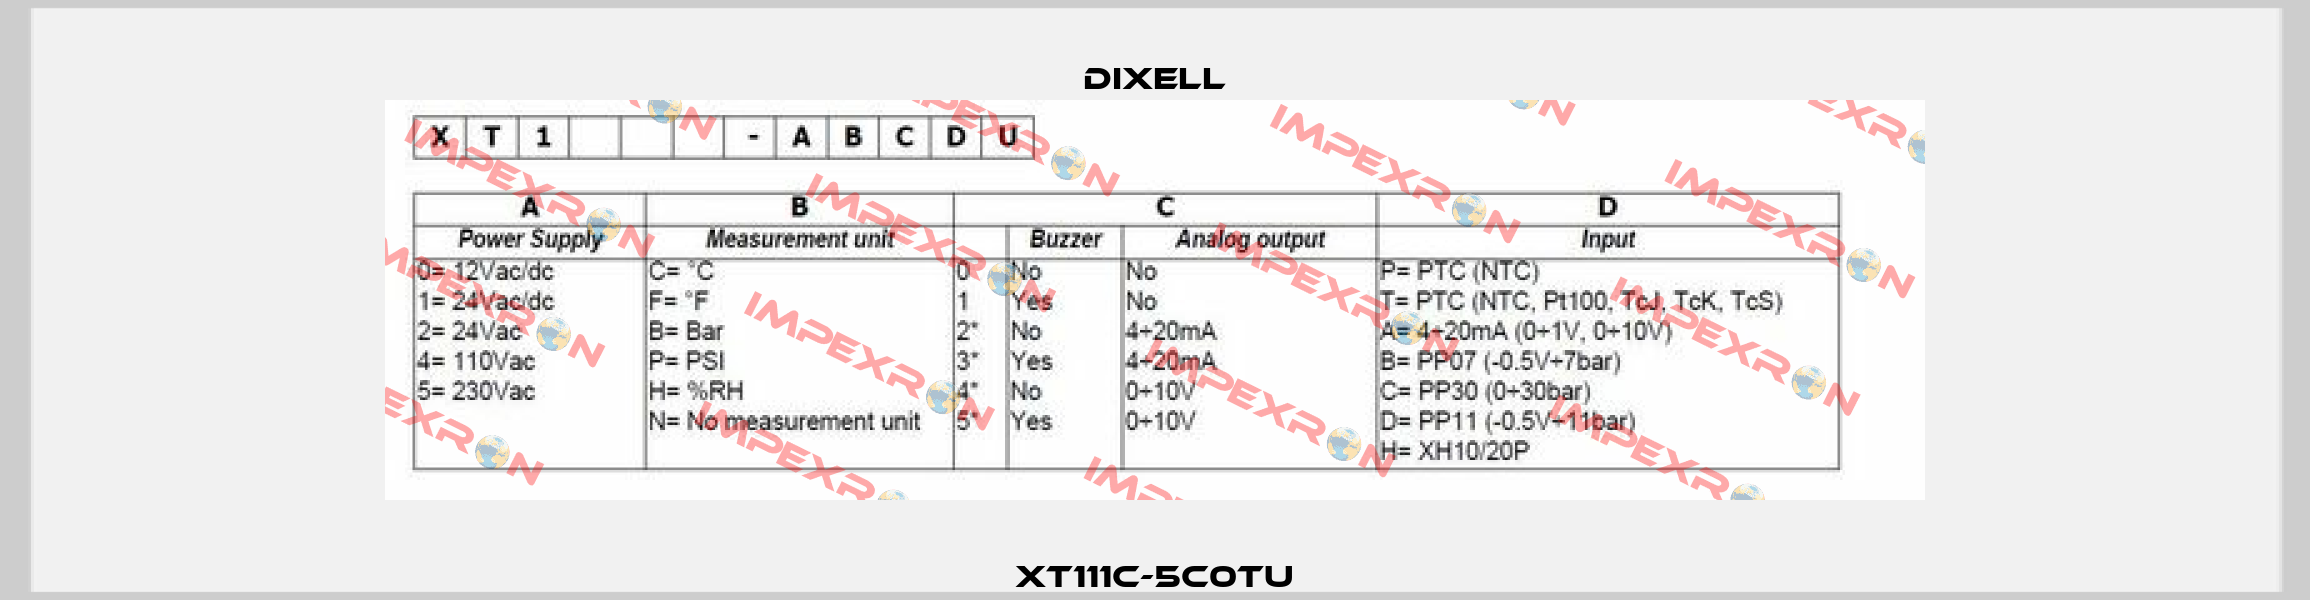 XT111C-5C0TU Dixell